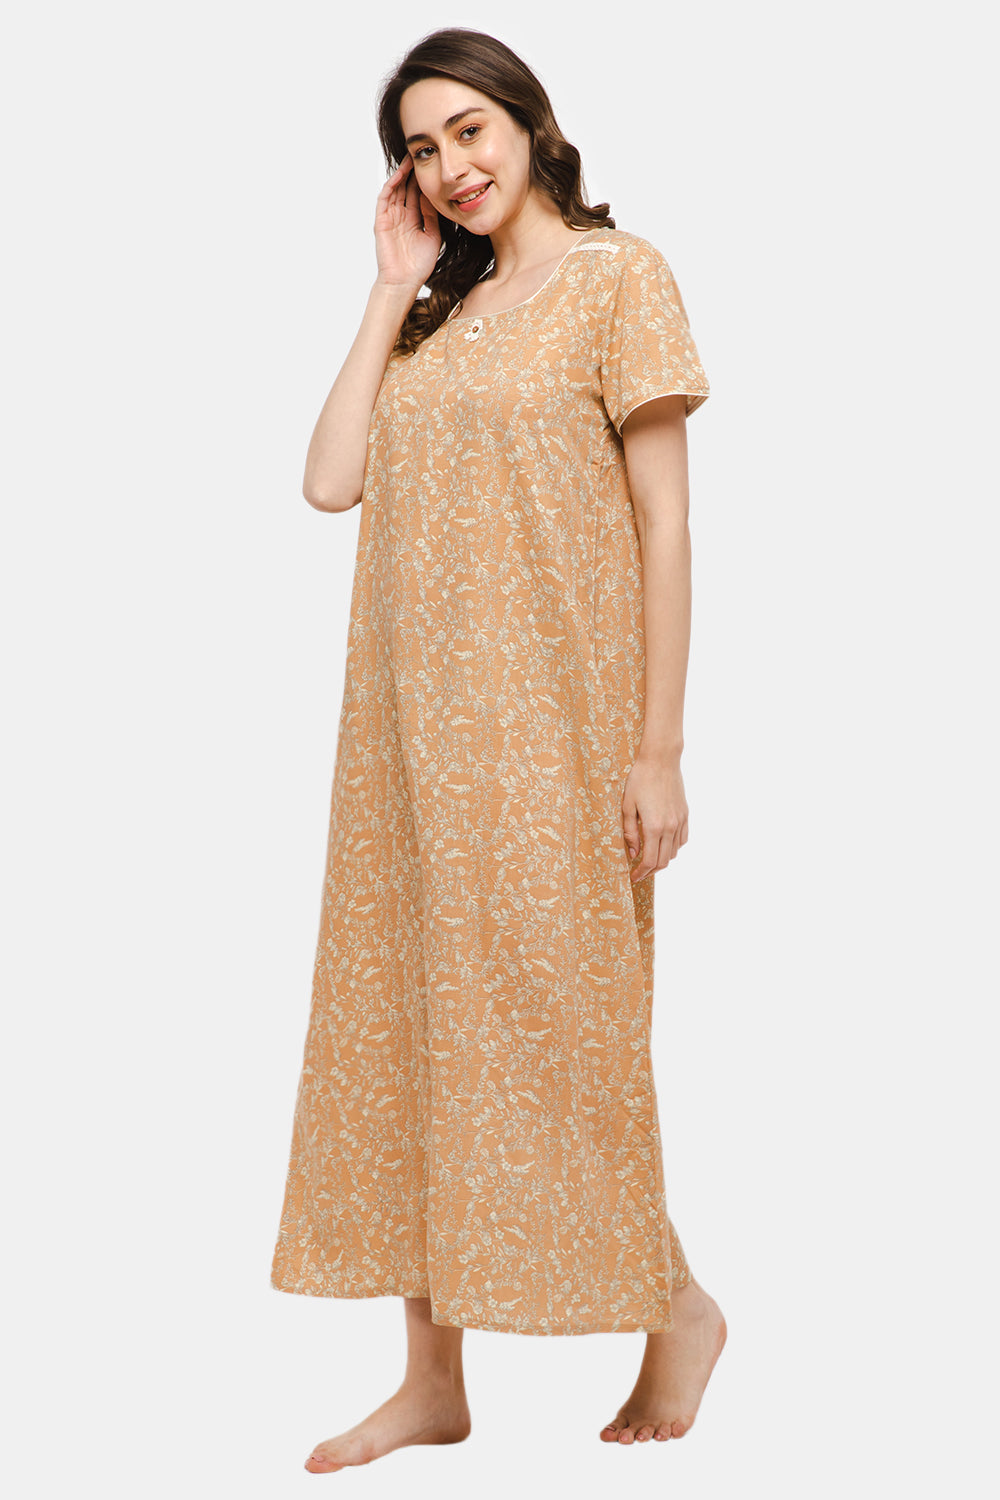 Naidu Hall Square Neck Short Sleeve Printed Nighty with Side Pocket - Orange NT31